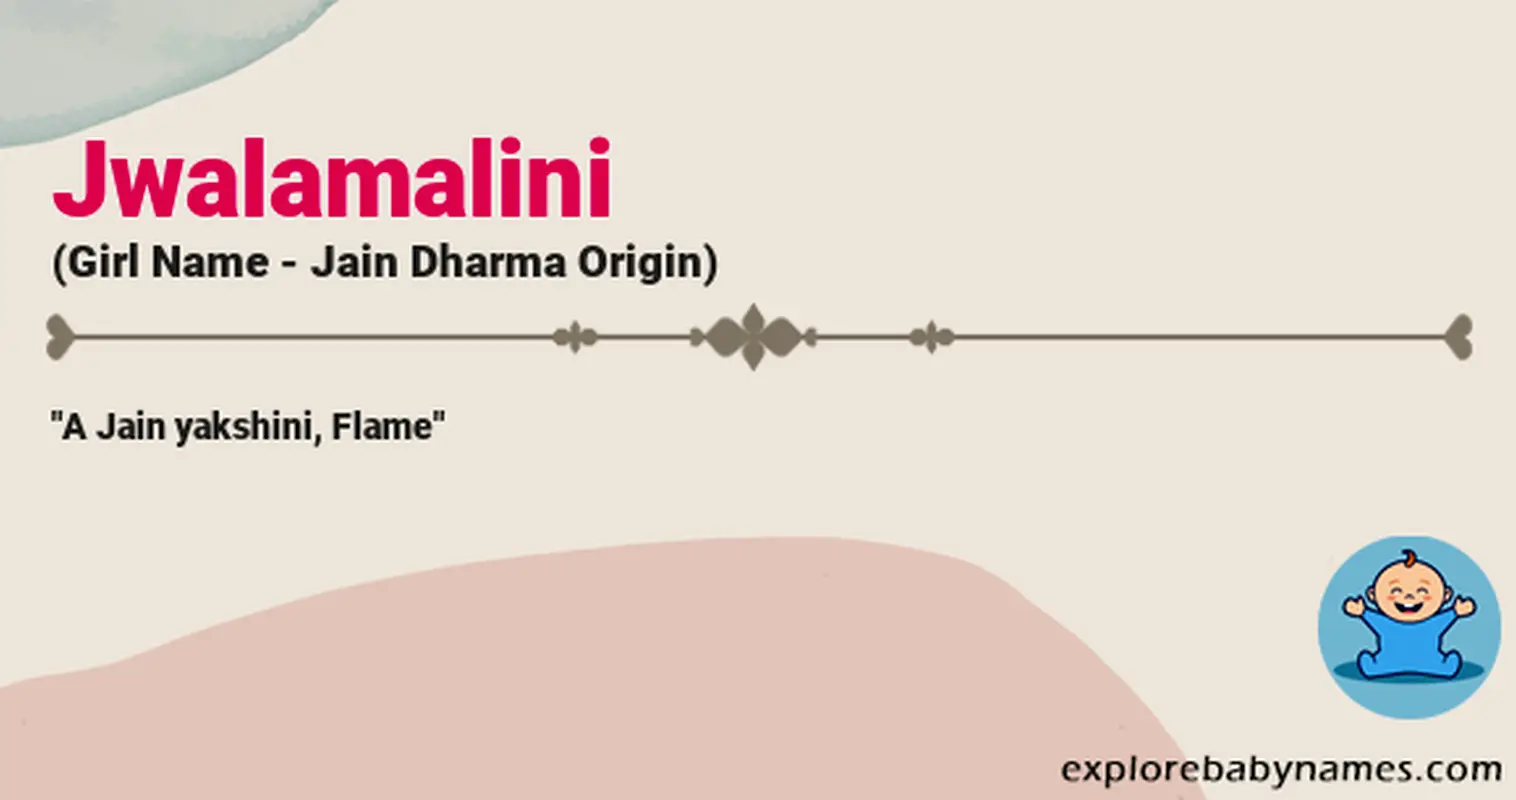 Meaning of Jwalamalini